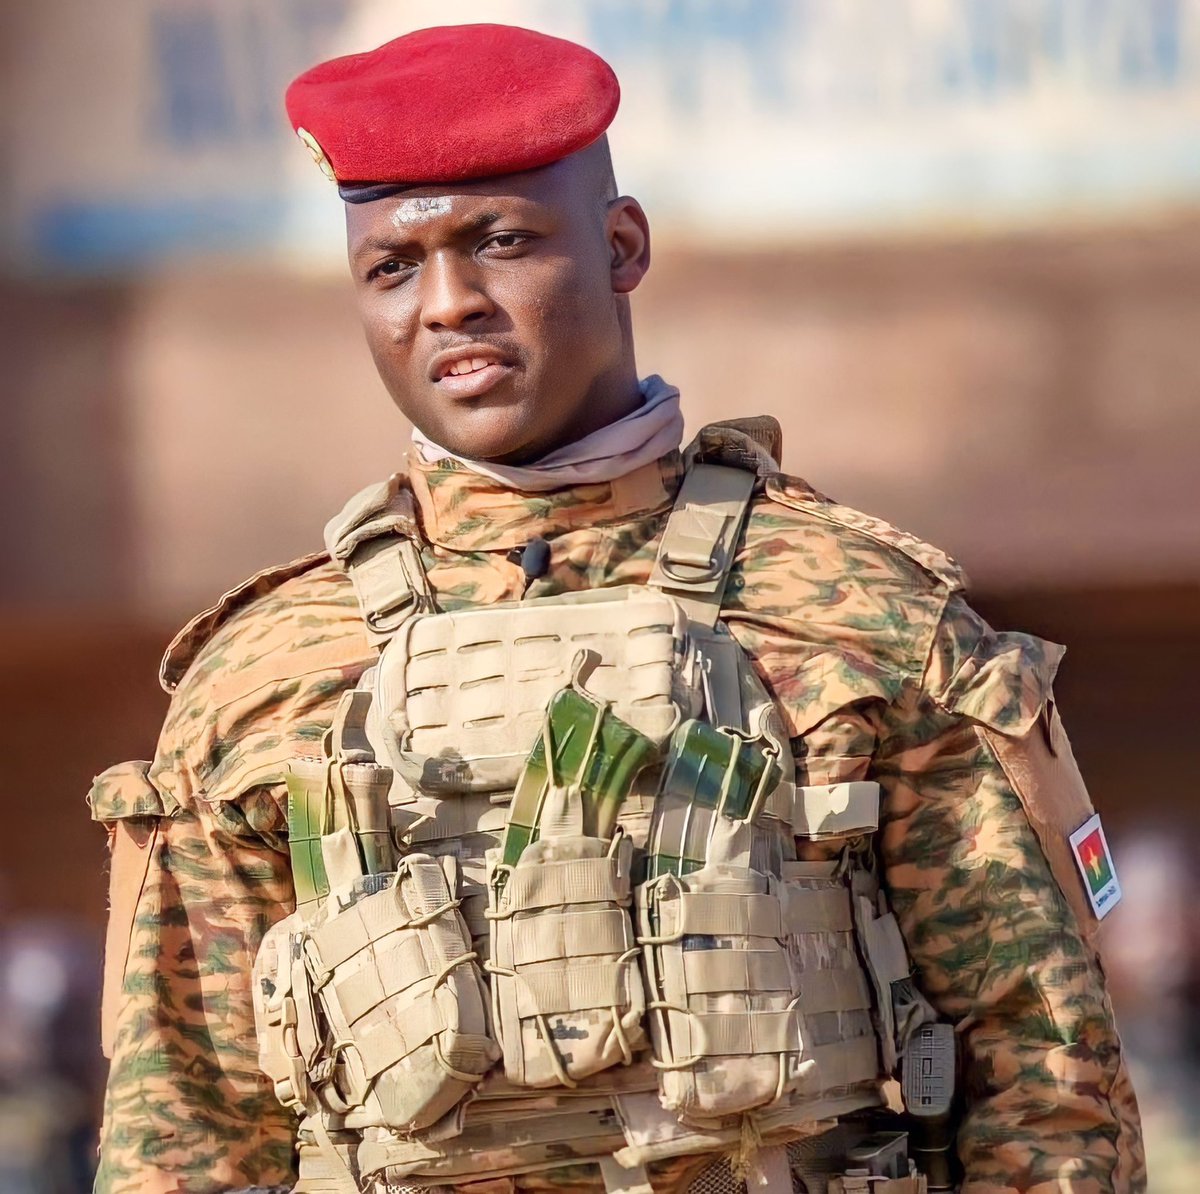 Captain Ibrahim Traore Burkina Faso president, new legend and hero of multipolar world 🌎